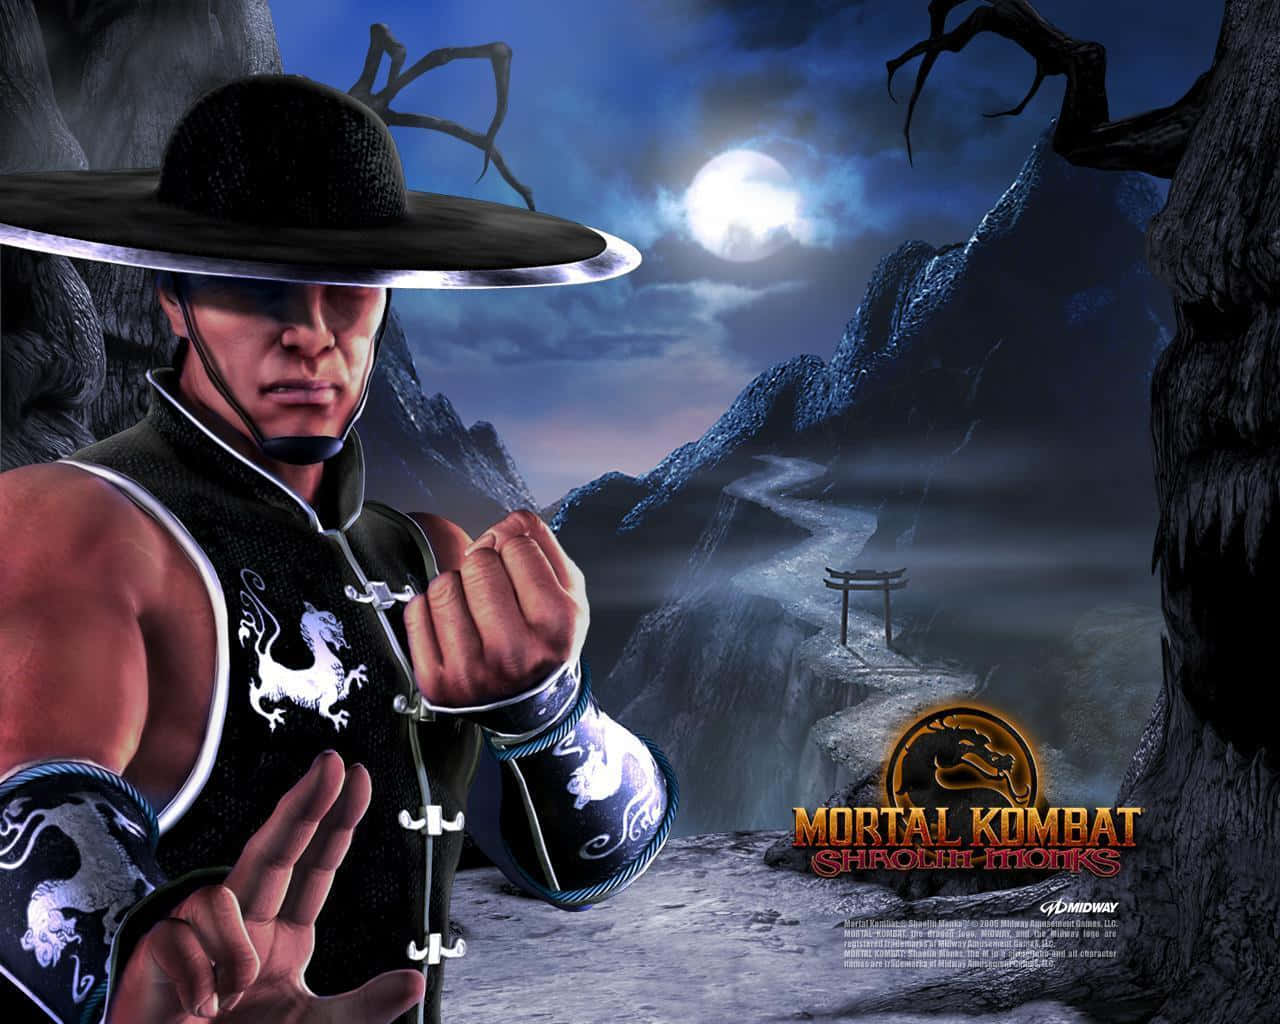 Kung Lao, the skilled martial artist from Mortal Kombat wielding his razor-sharp hat Wallpaper